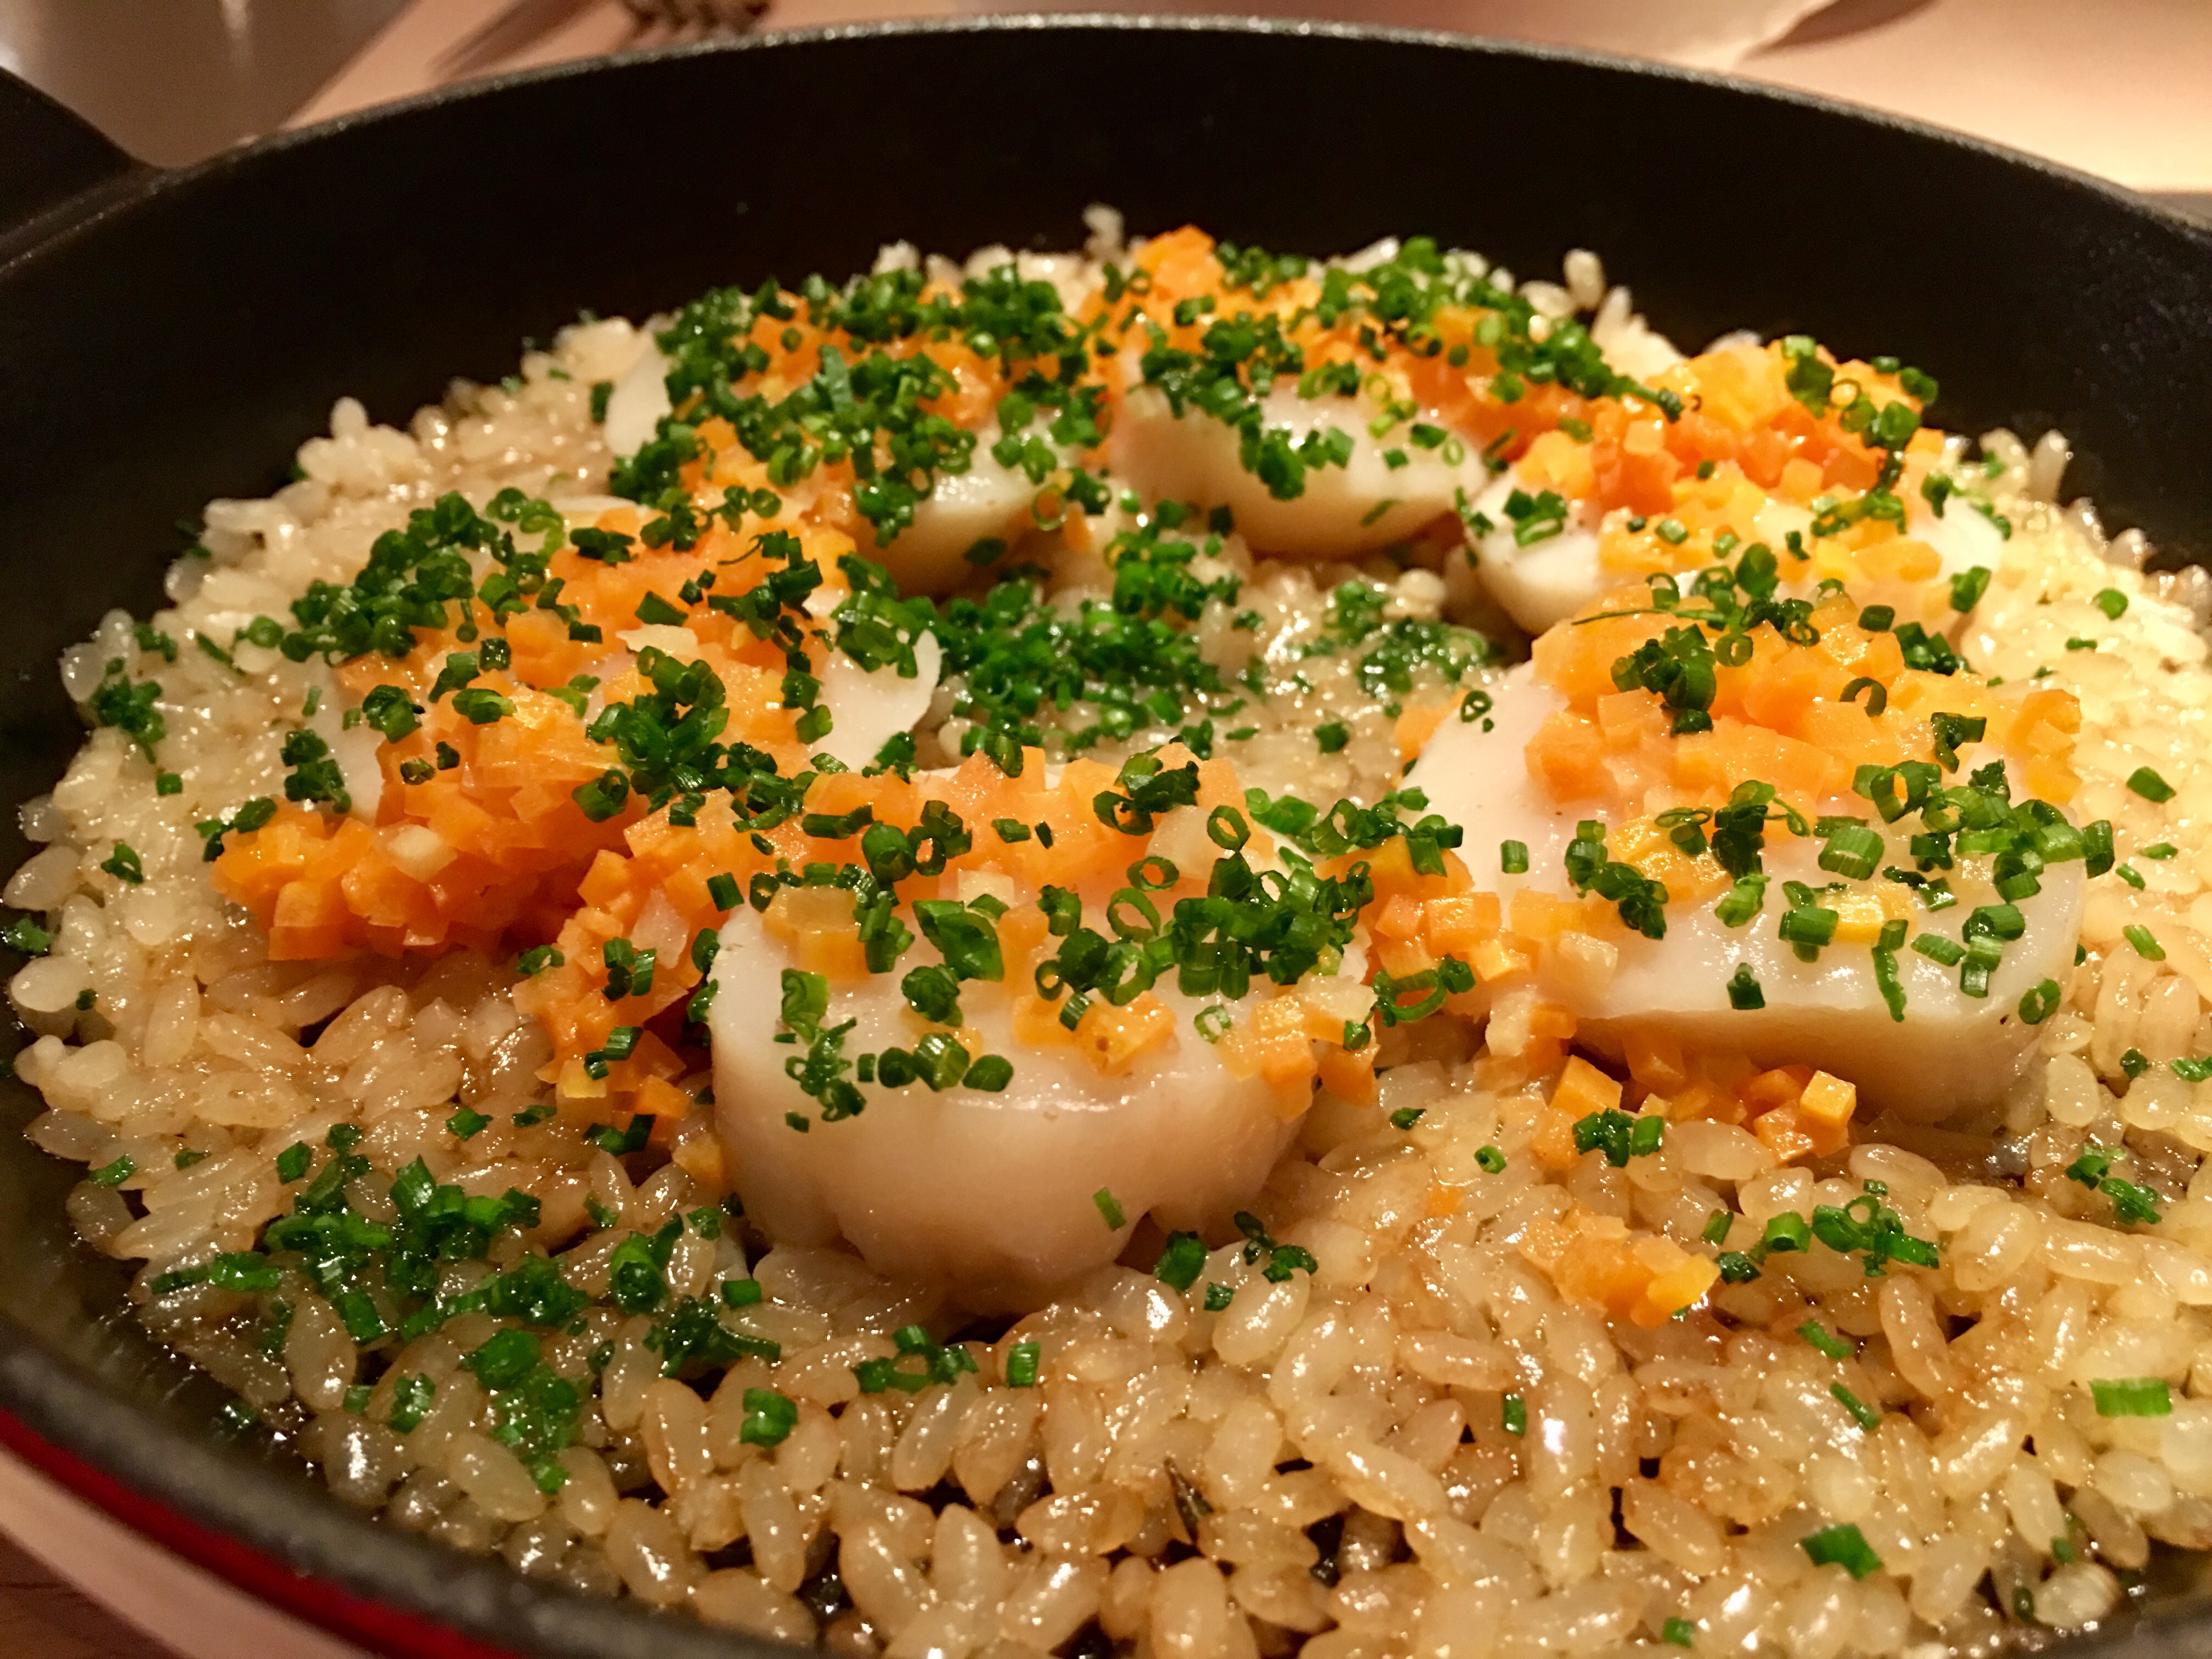 The sea scallops over pilaf rice at Terroir Parisien.